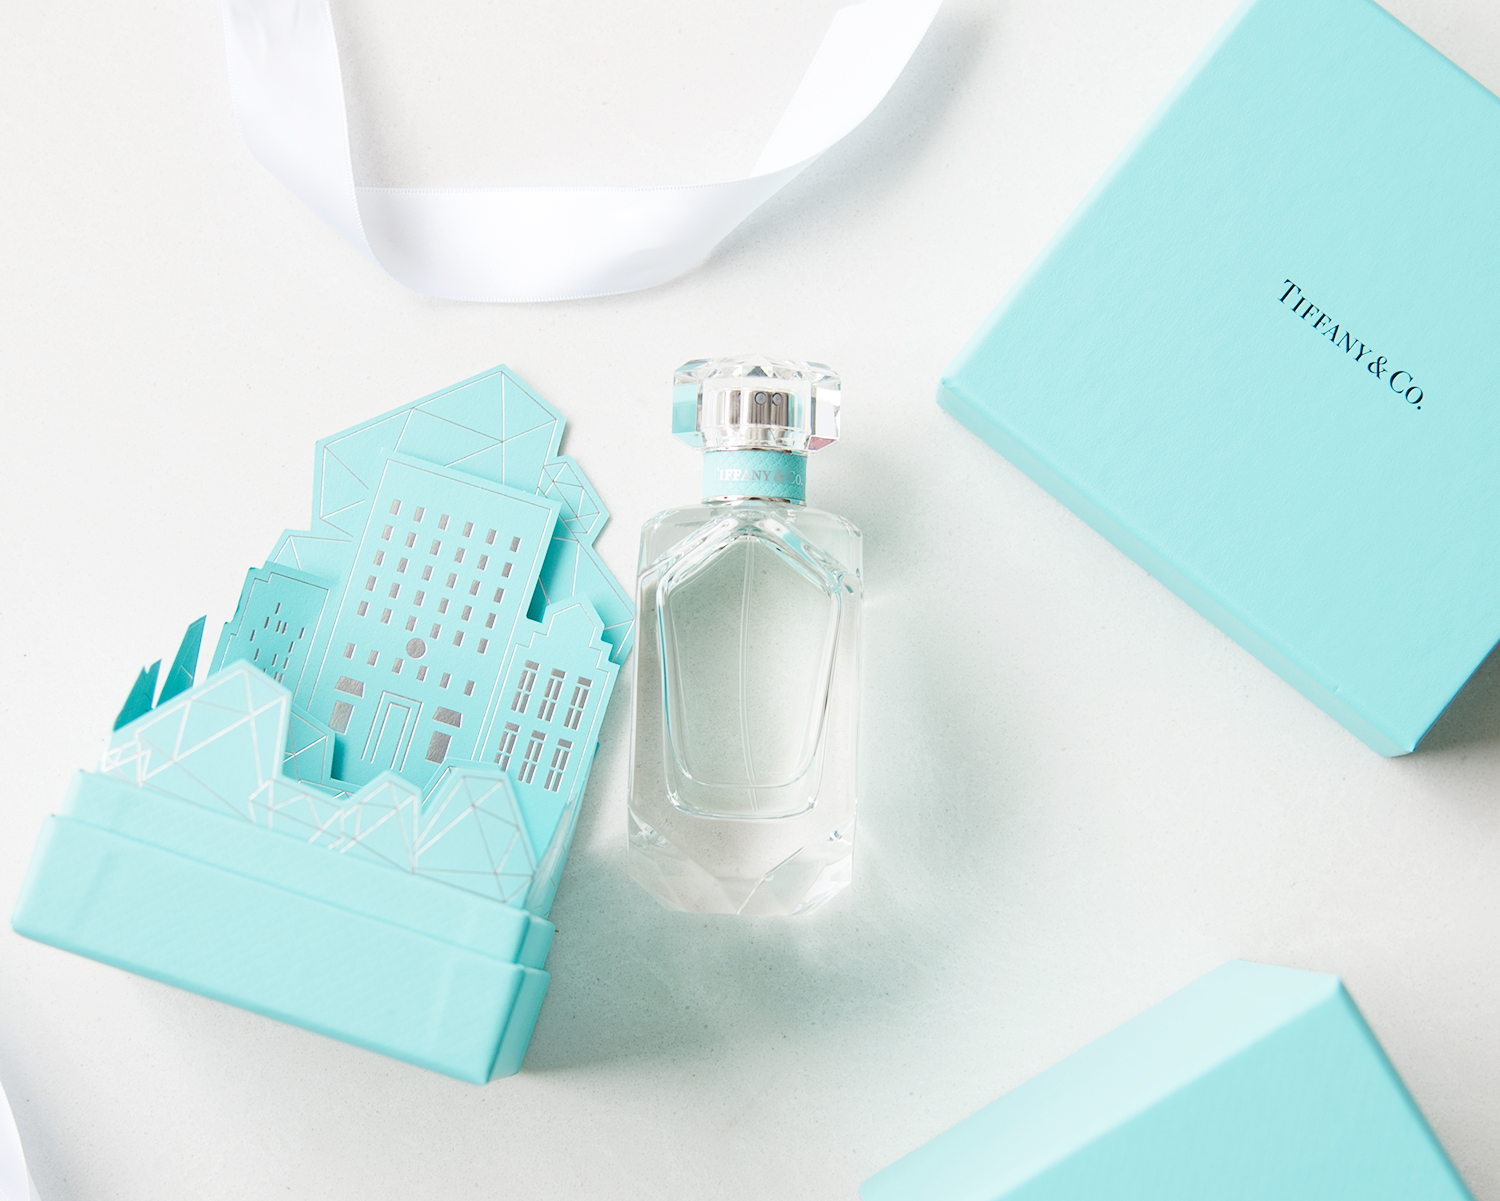 Tiffany Eau de Parfum: Signature Fragrance